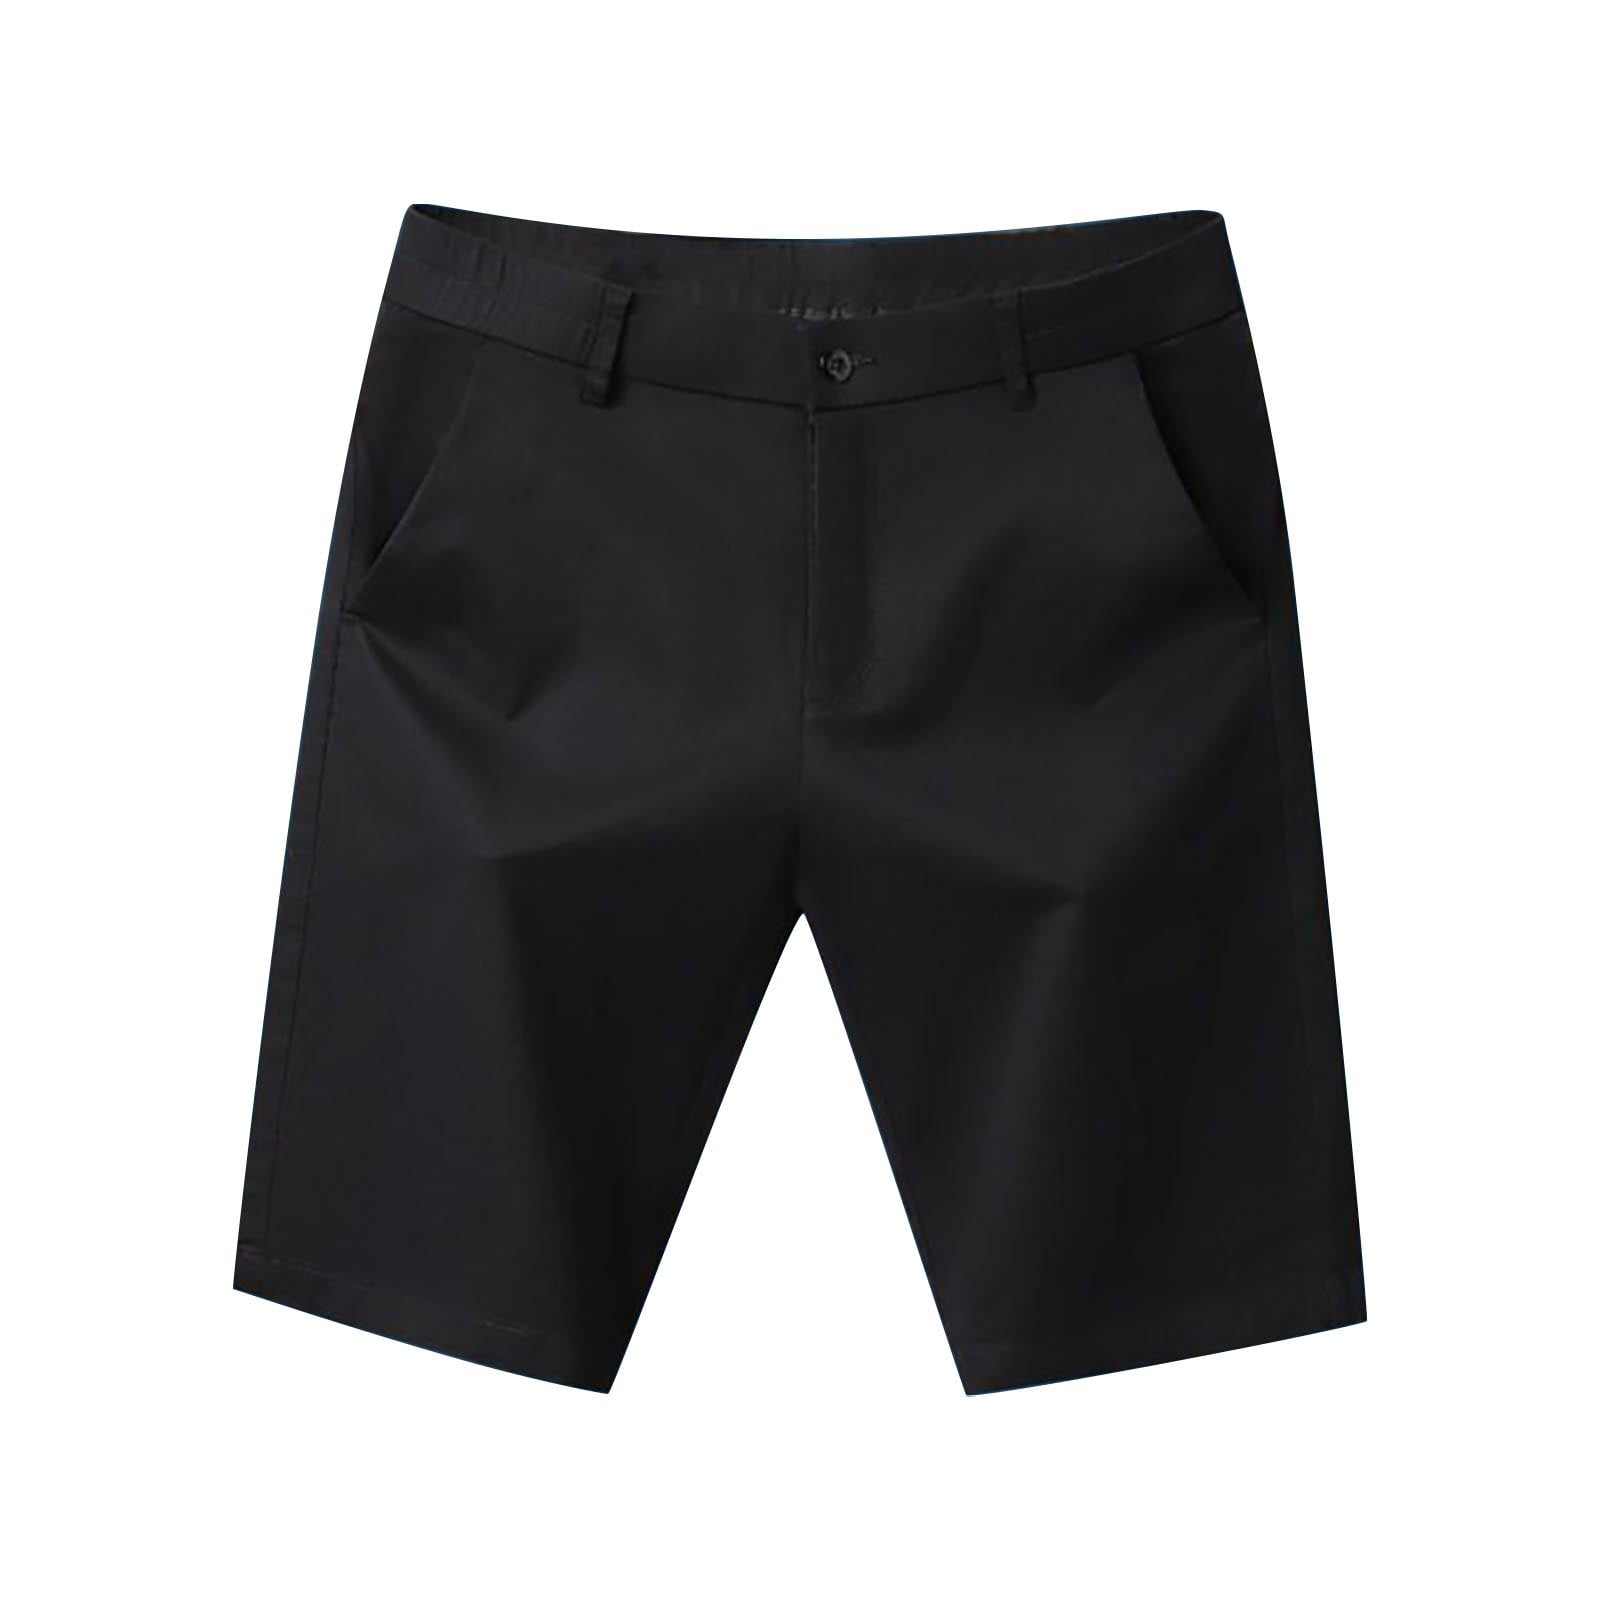 adviicd Mens Shorts Casual Slim Fit Men's Casual Classic Short Summer ...